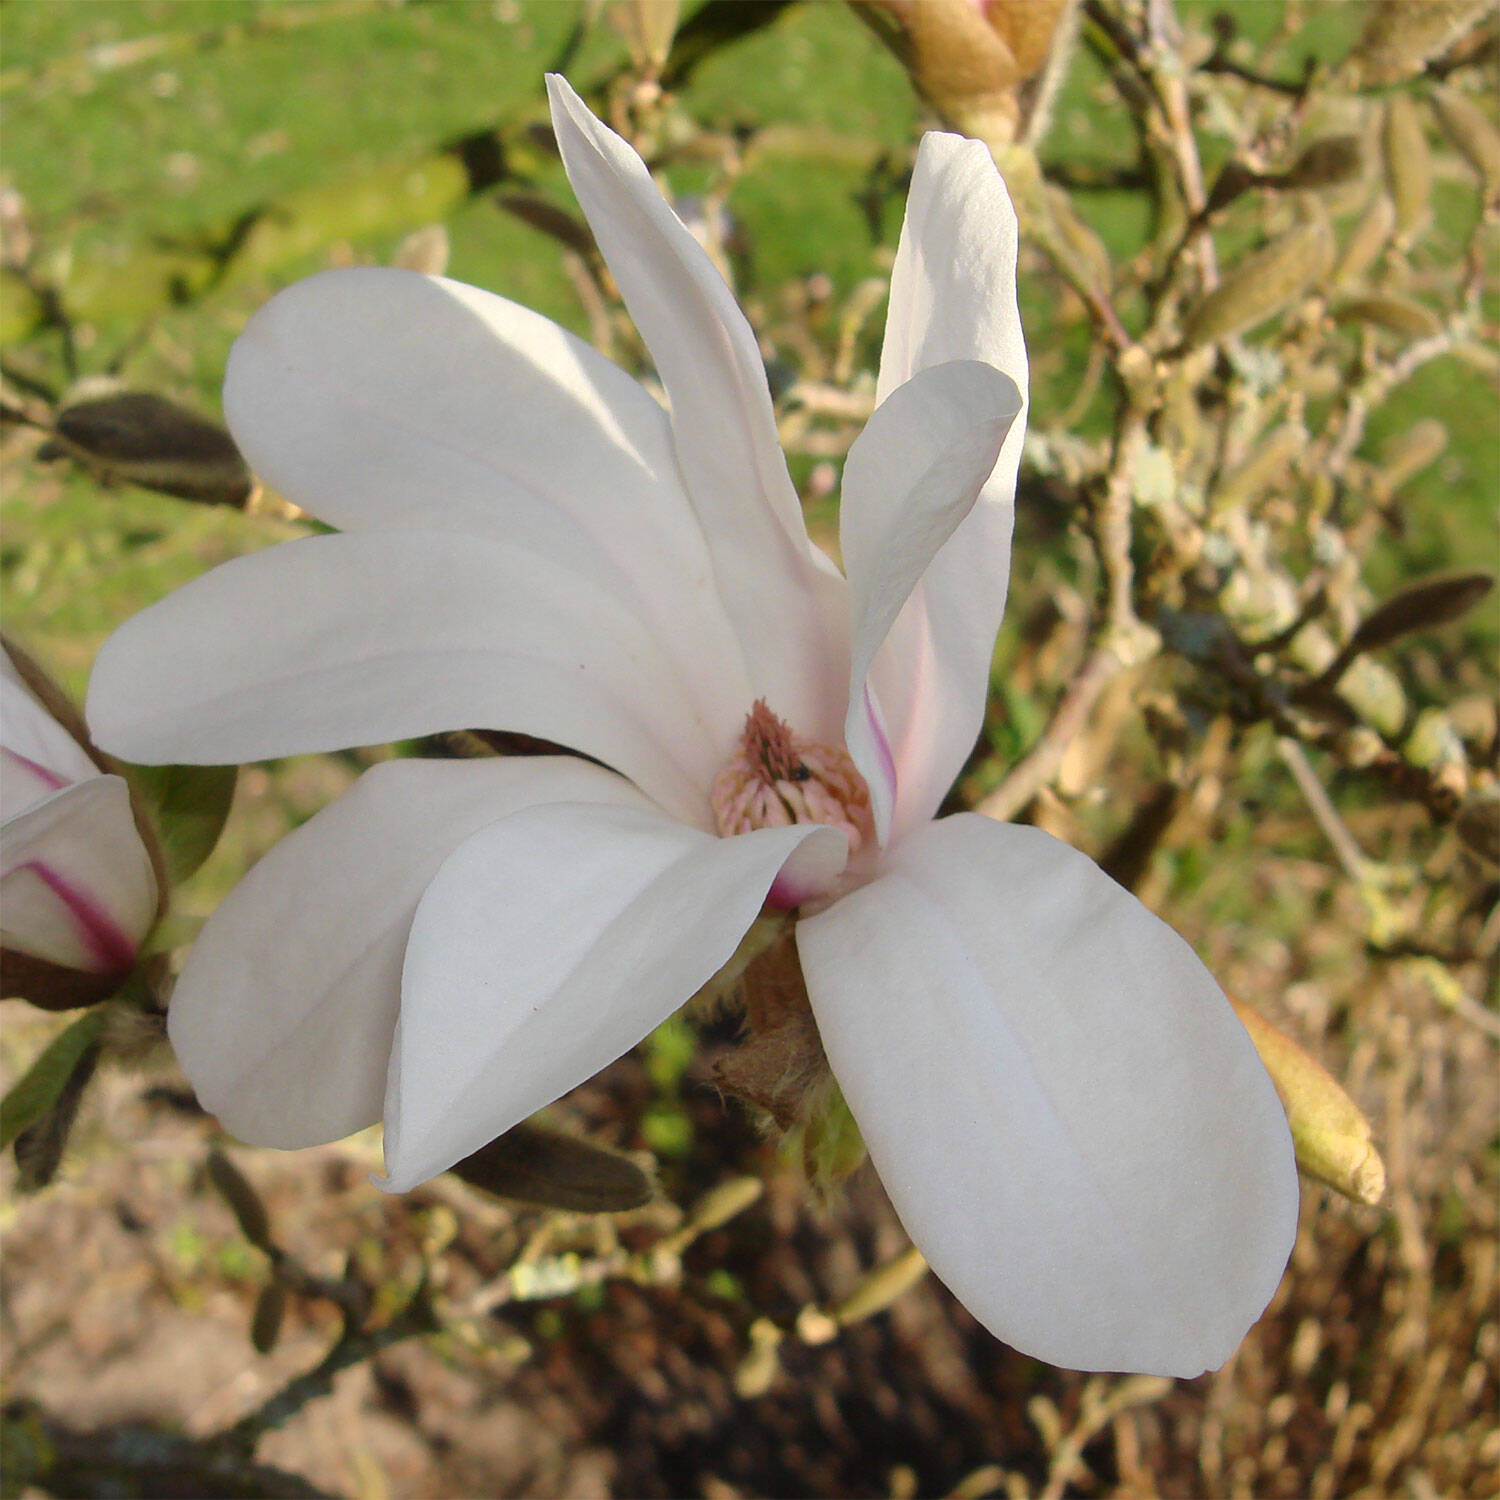  Tulpenmagnolie - Magnolia soulangiana